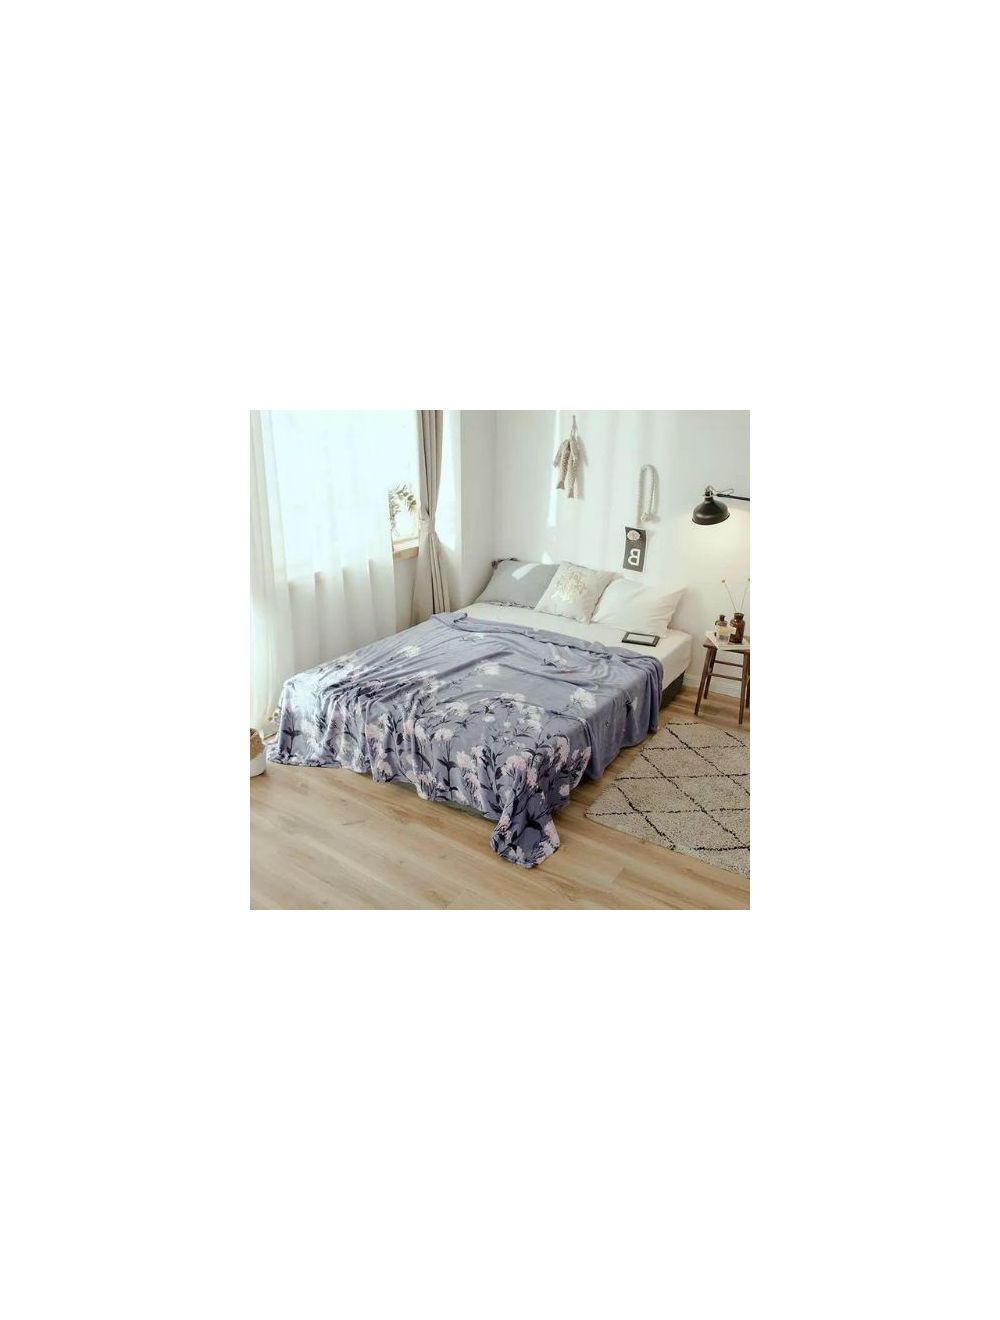 DEALS FOR LESS - Soft Fleece Blanket, Purple Floral Design.-bhz32-05